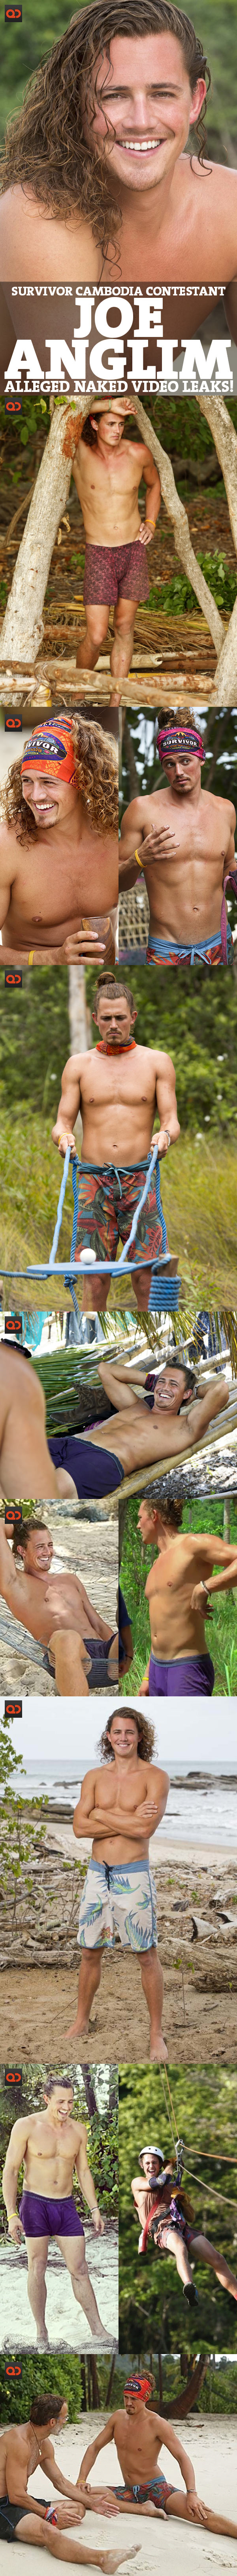 Joe Anglim, Survivor Cambodia Contestant, Alleged Naked Video Leaks!